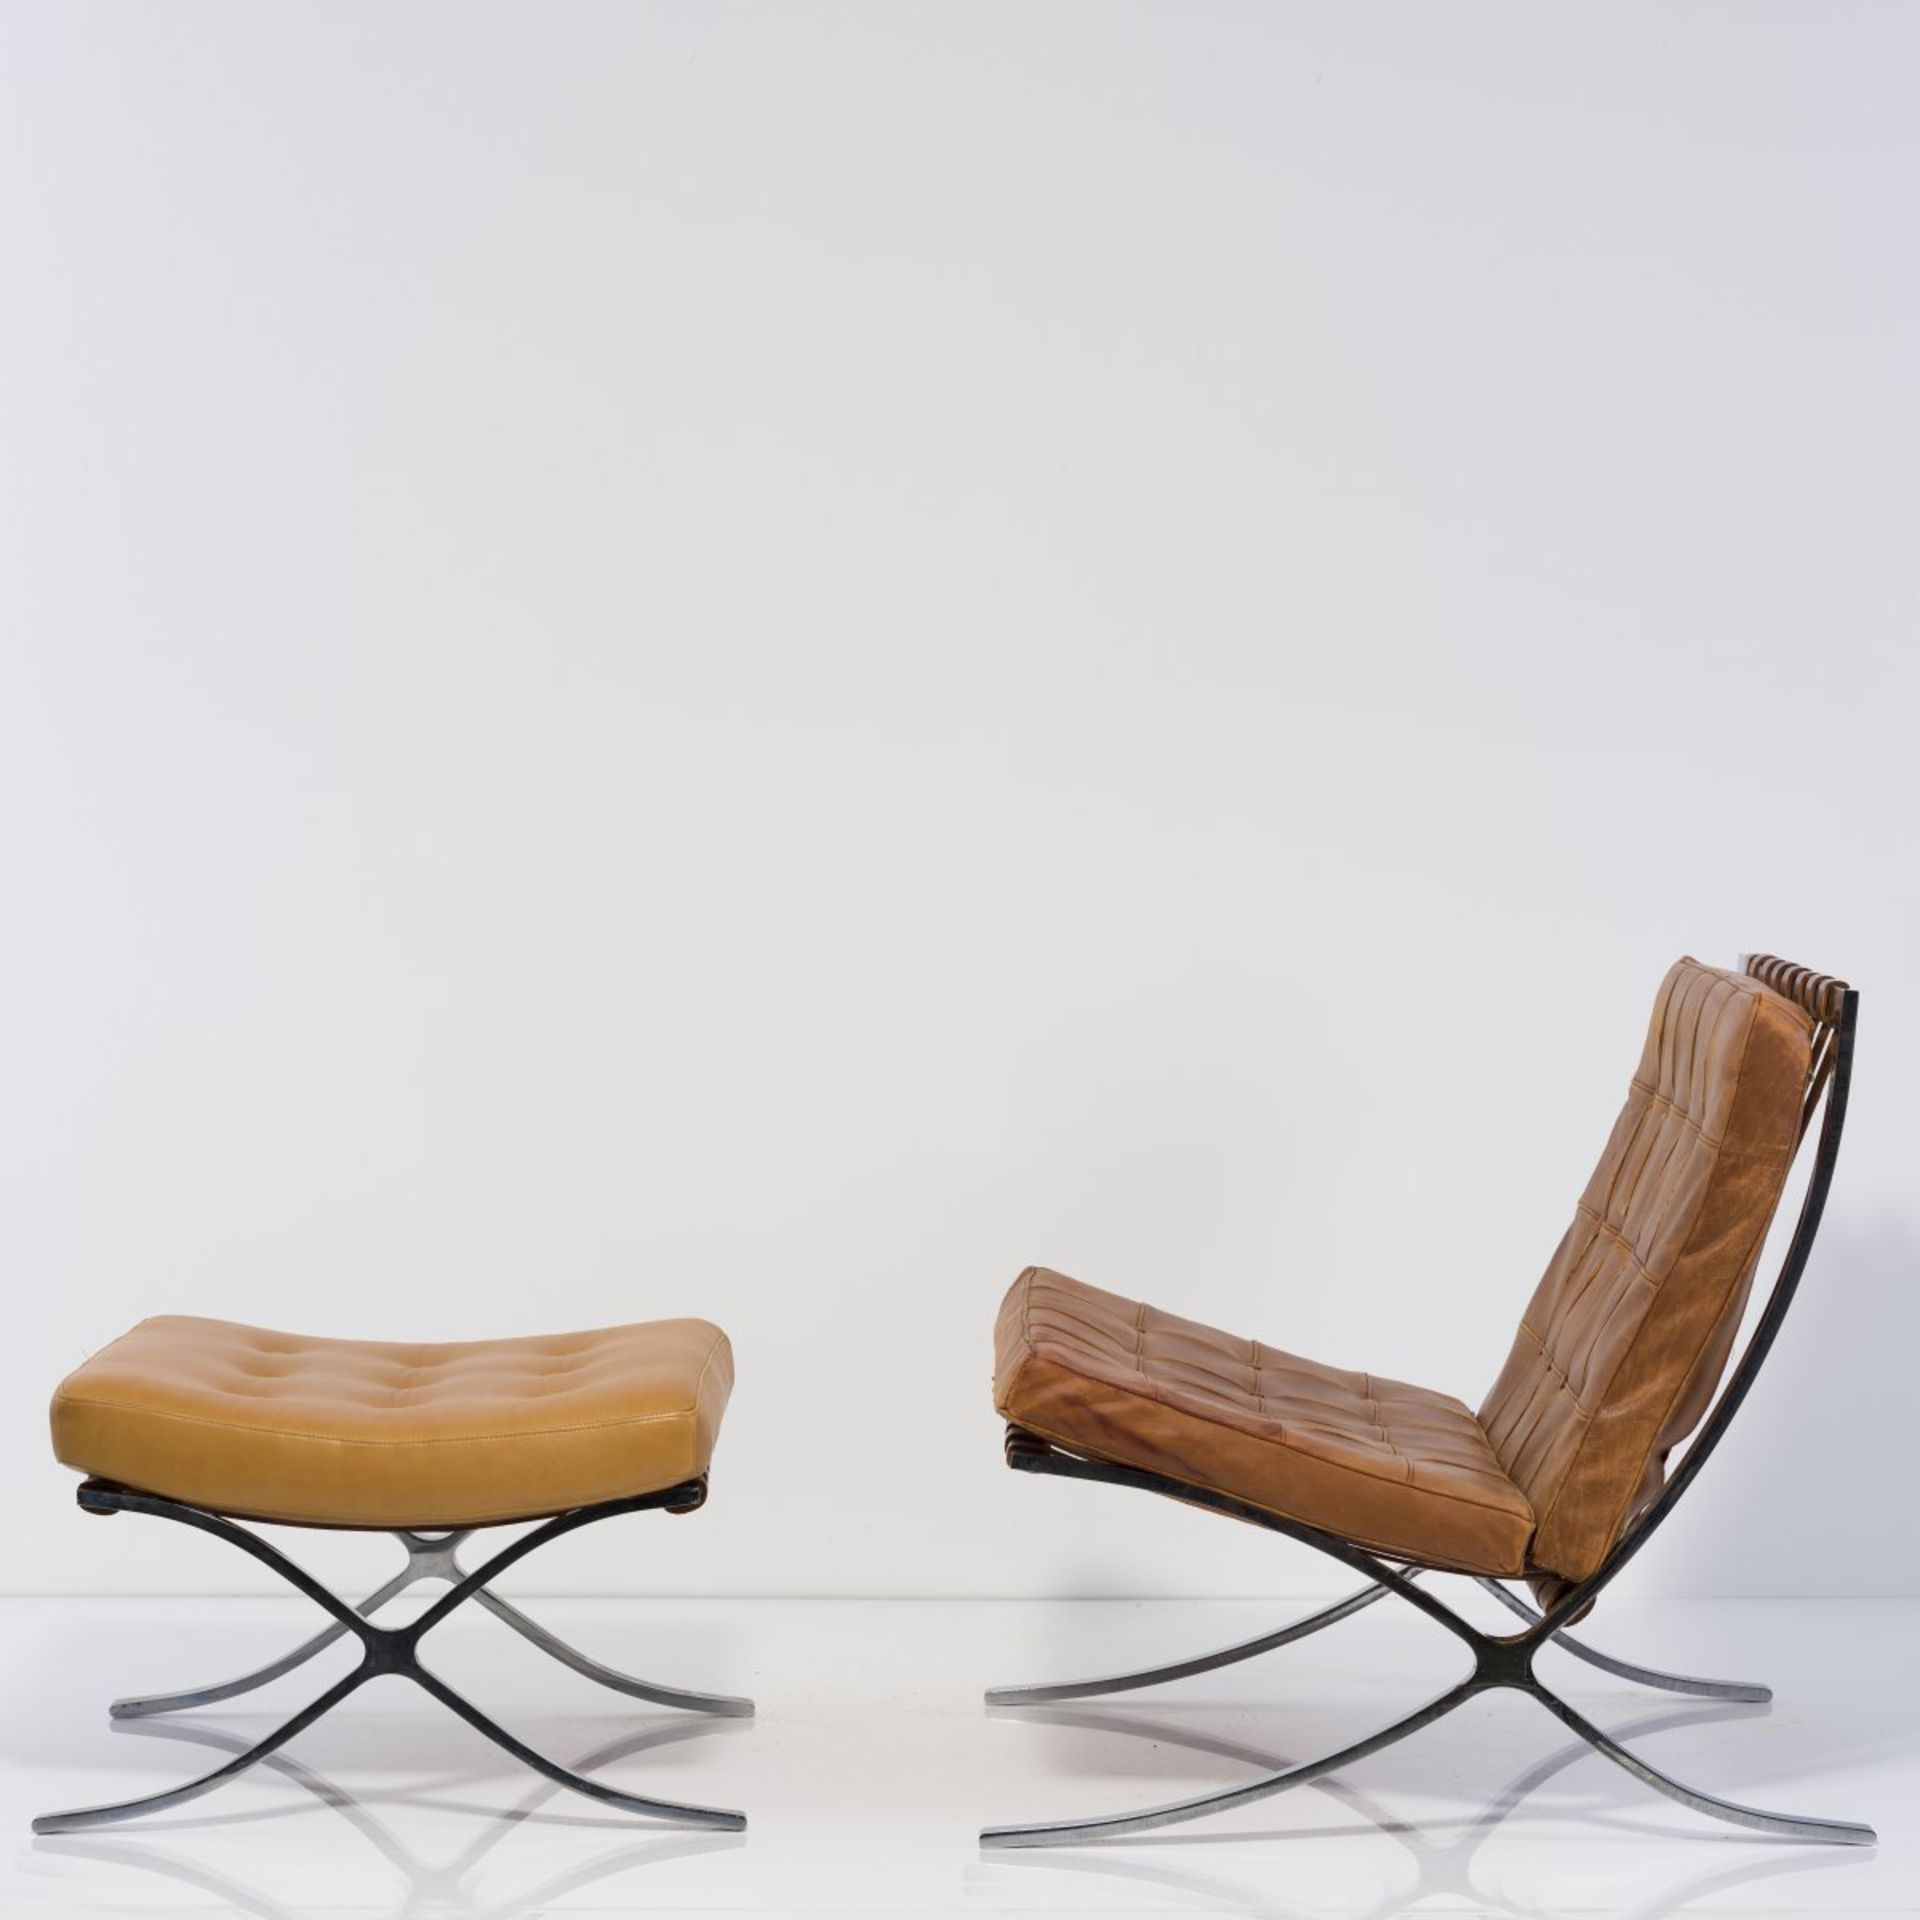 Ludwig Mies van der Rohe, Sessel 'Barcelona chair' mit Ottoman, 1929